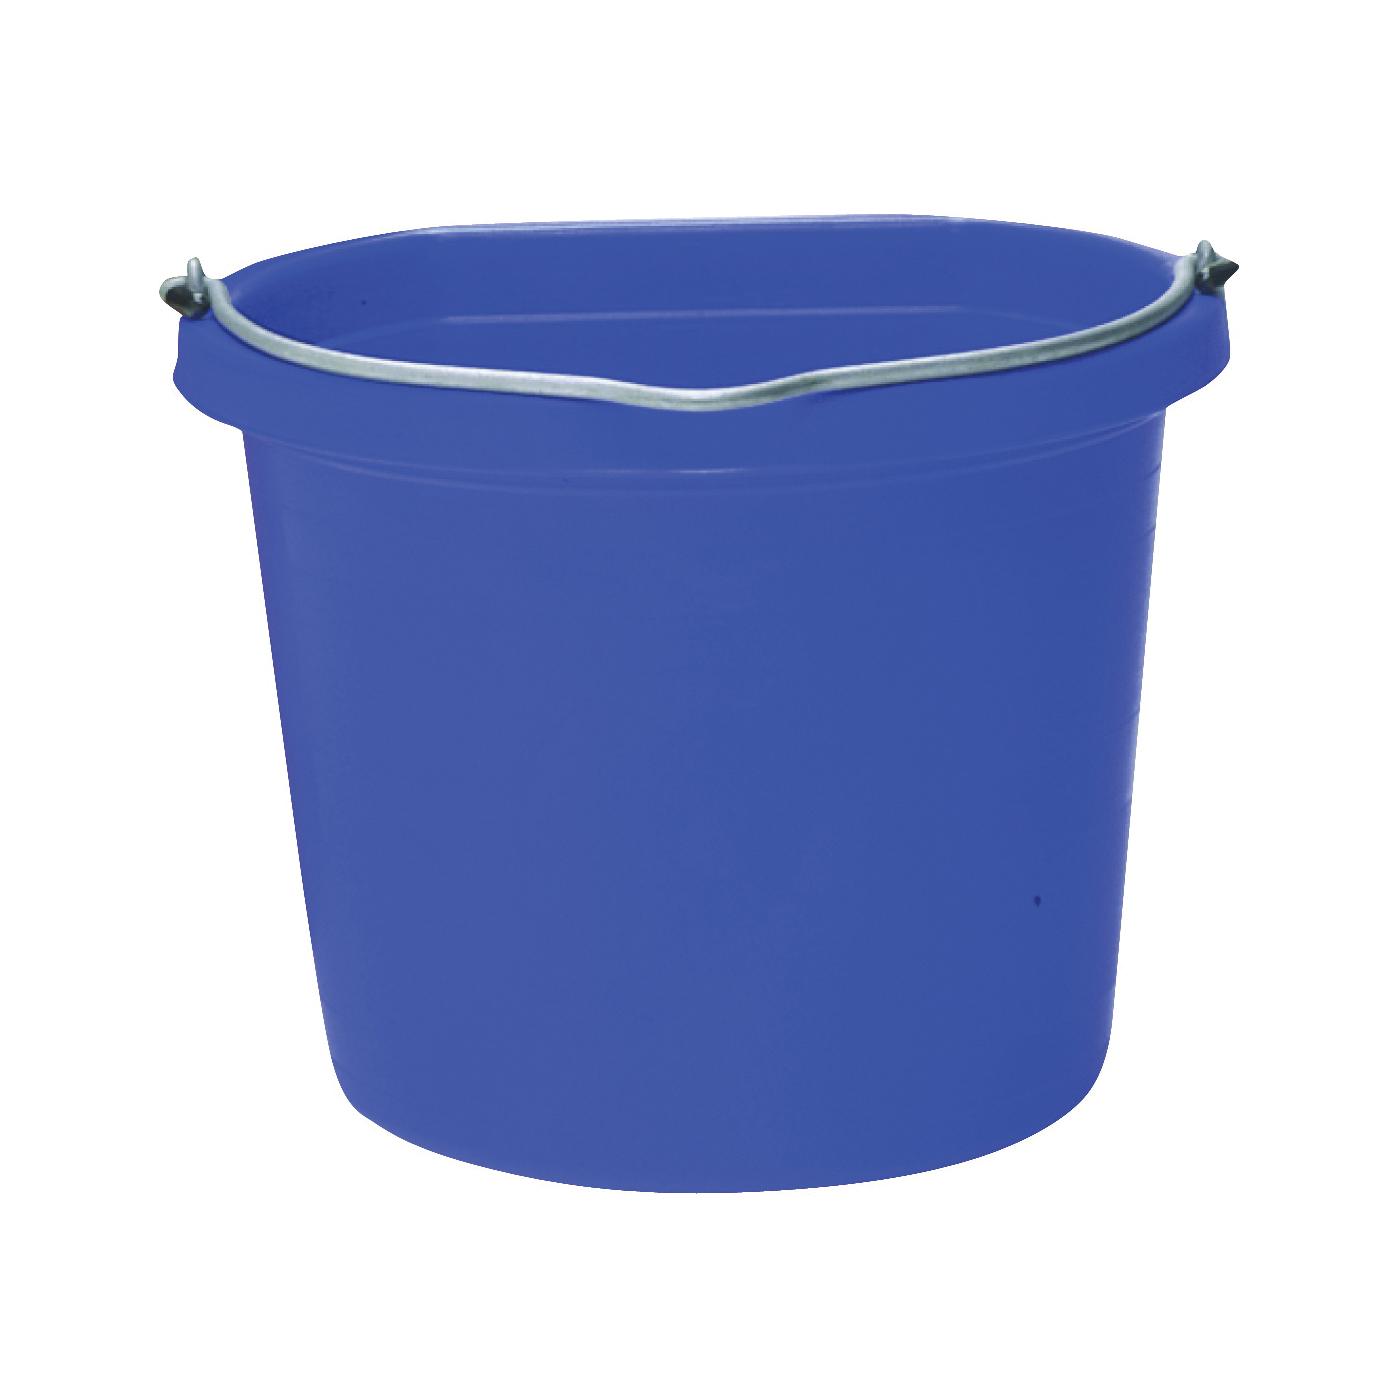 1302040 Bucket, 20 qt Volume, Polyethylene Resin, Blue